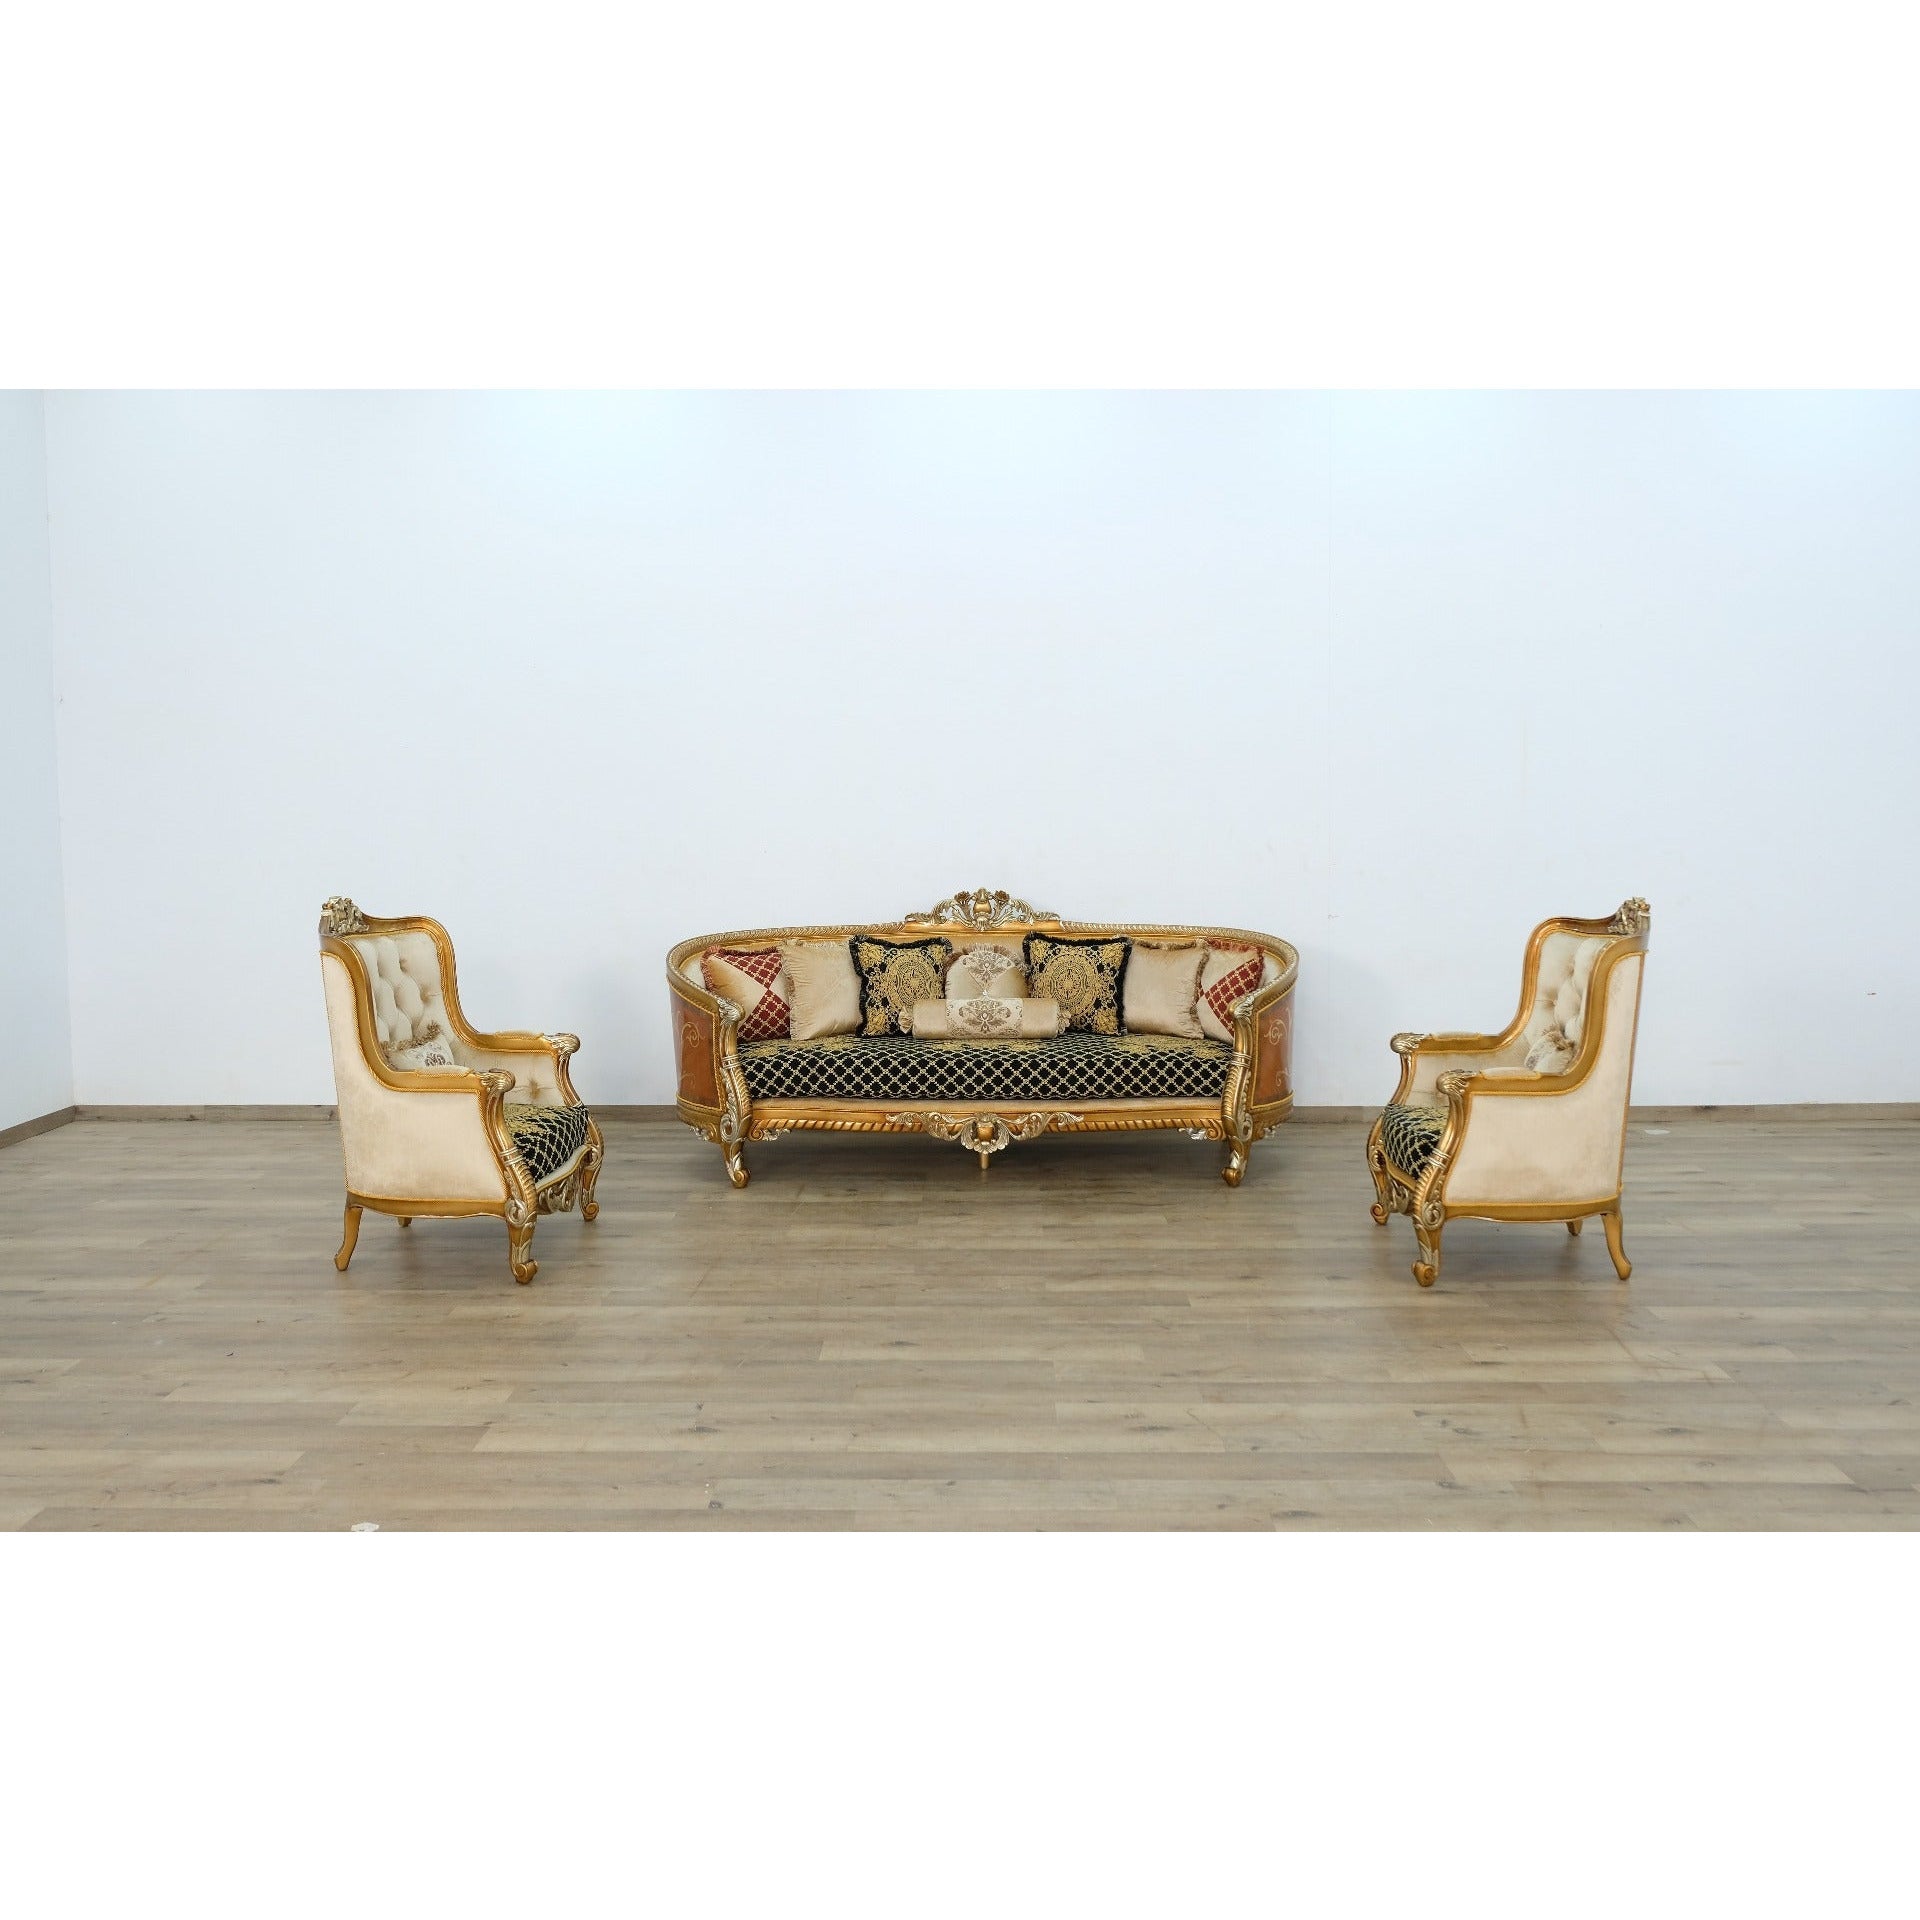 European Furniture - Luxor II Sofa in Black Gold - 68586-S - New Star Living